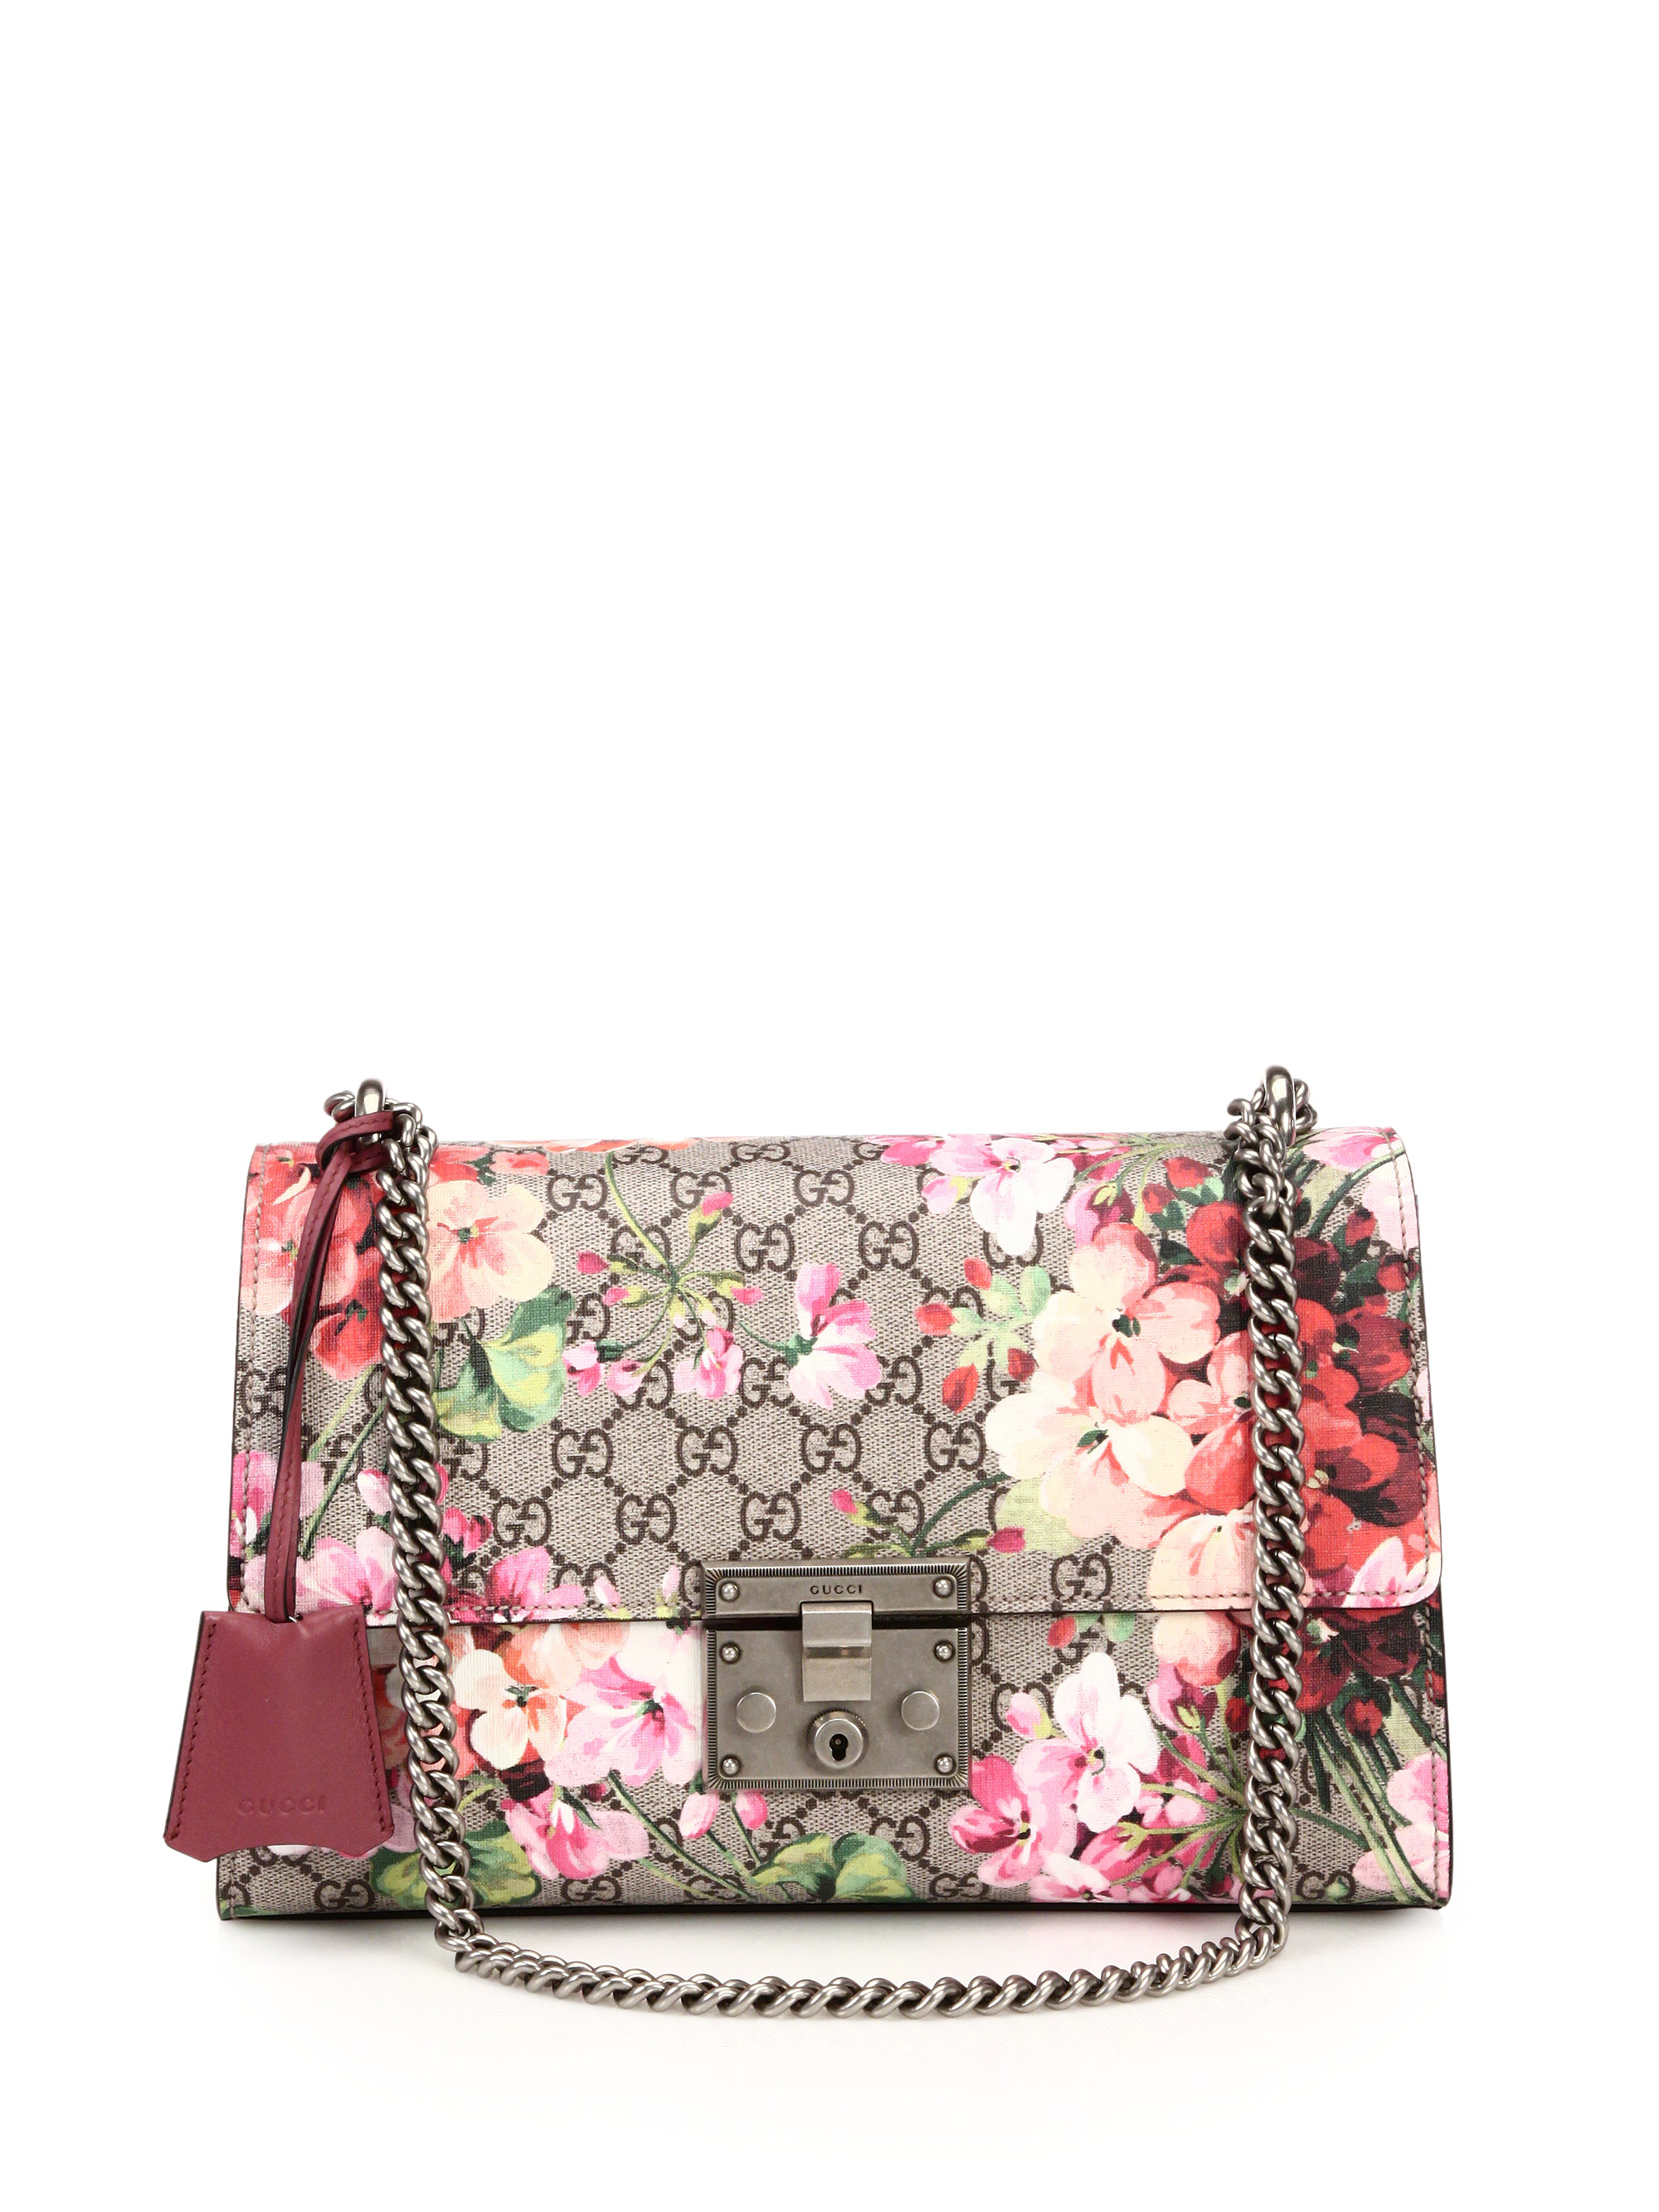 Lyst - Gucci Padlock Blooms Shoulder Bag in Pink